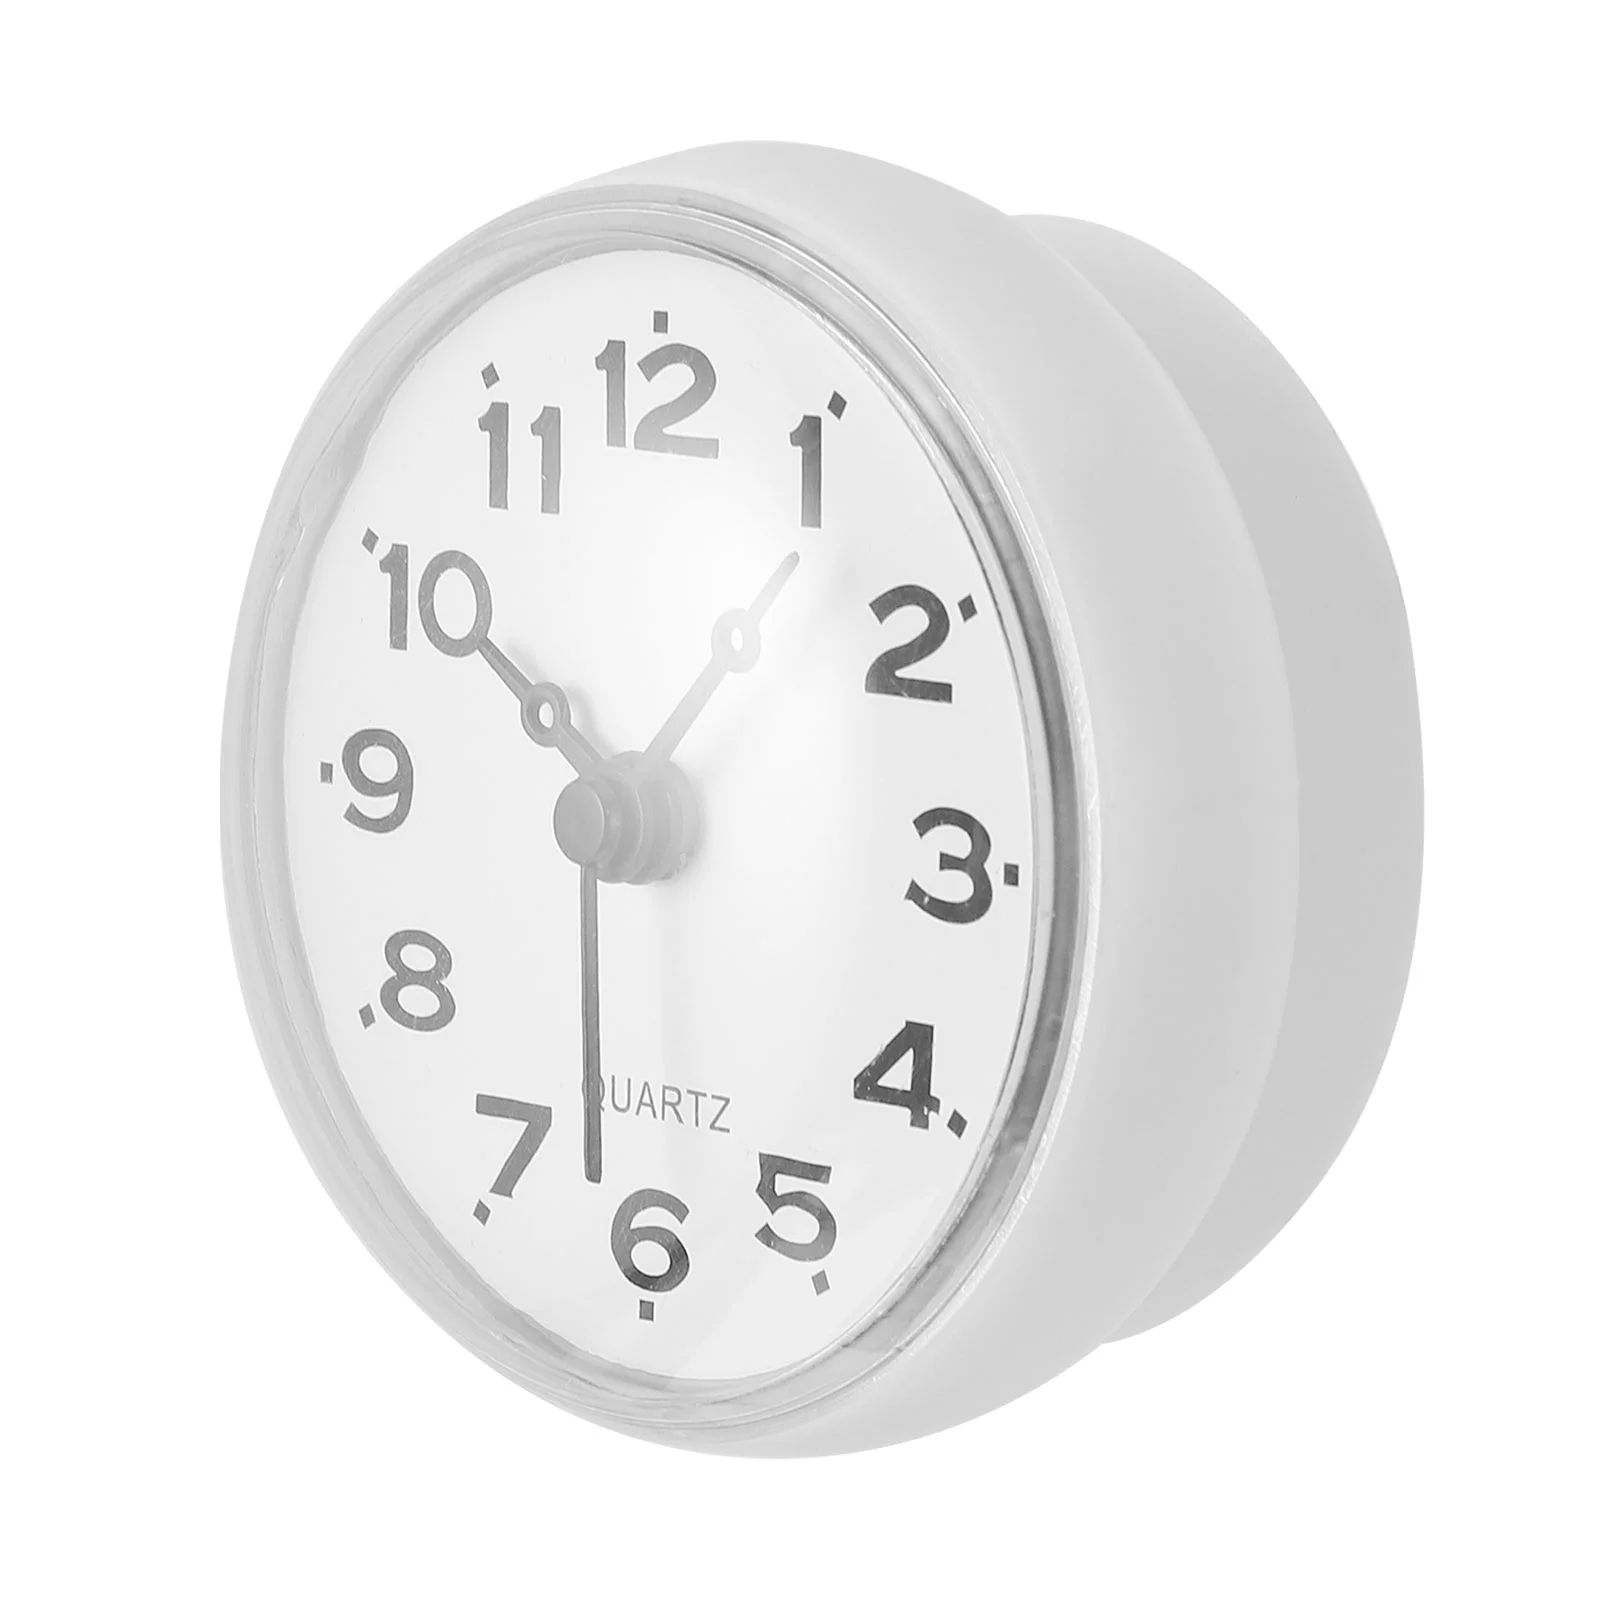 Настенные часы Маленькие Цифровые настенные часы Водонепроницаемые Наружные часы Без тиканья Часы для душа с батарейным питанием Цифровые часы Таймер